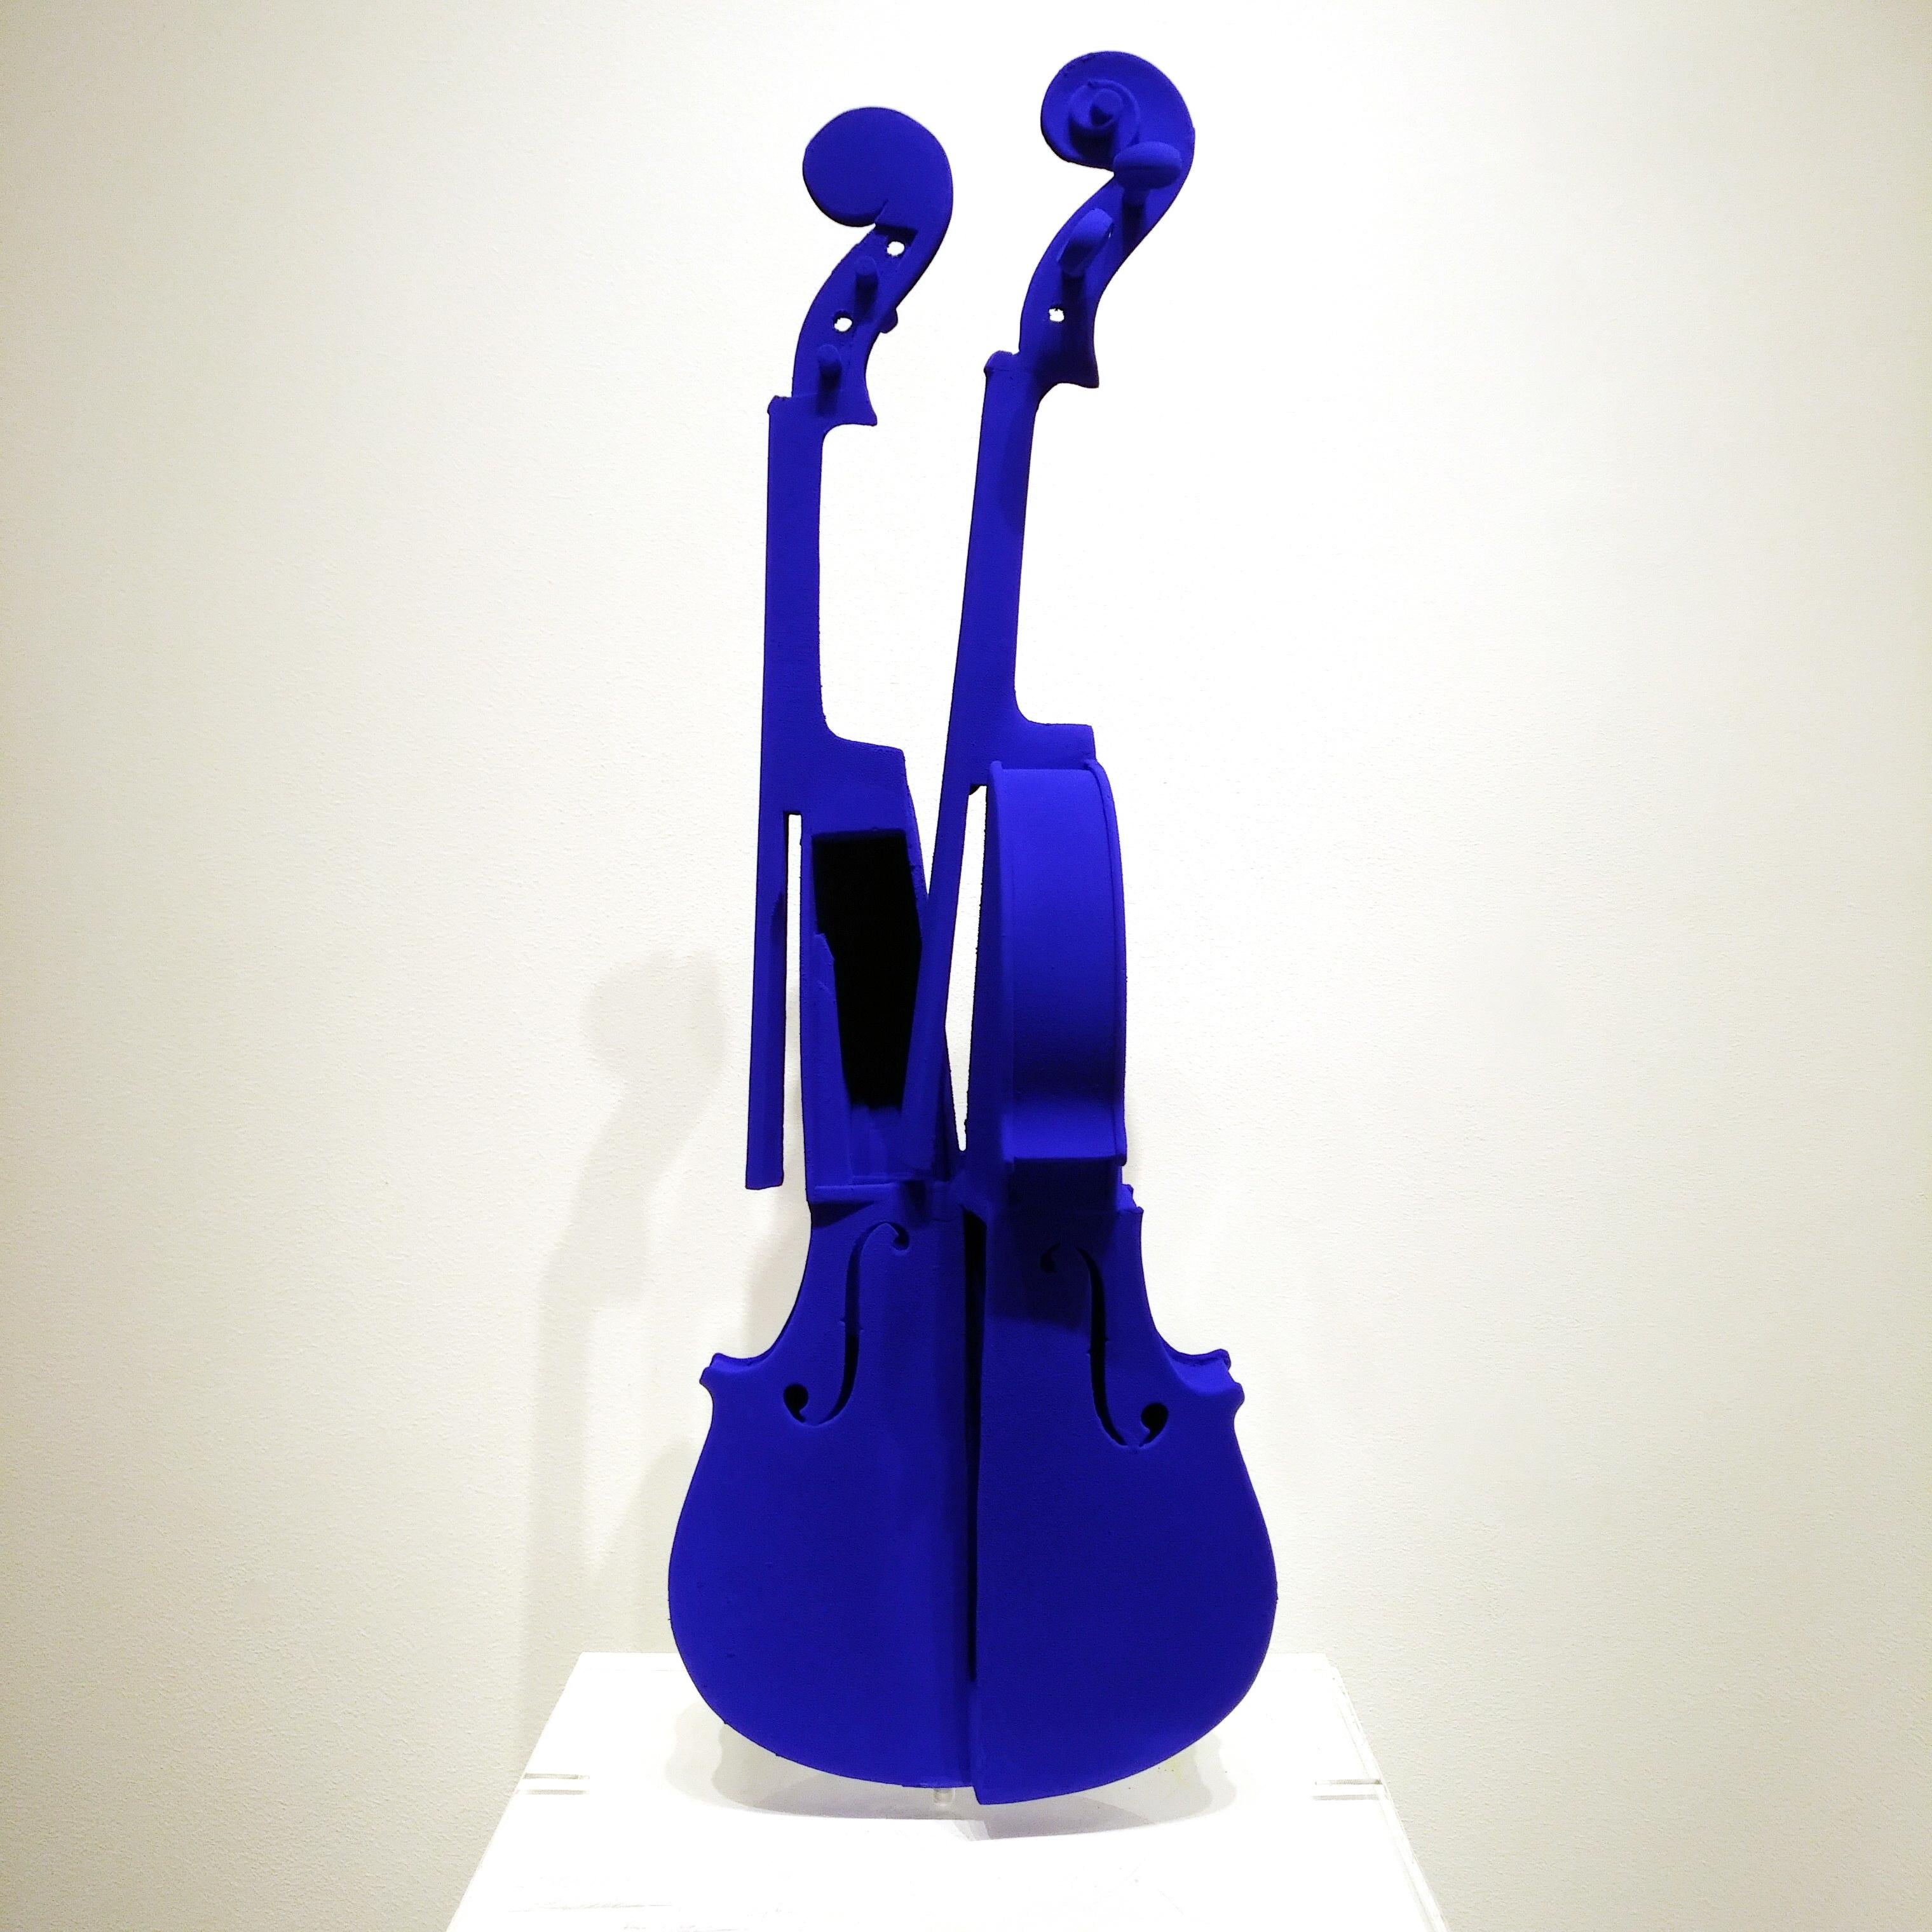 Arman Cintra Violin Tribute to Yves Klein IKB Blue on Wood Violin For Sale 9